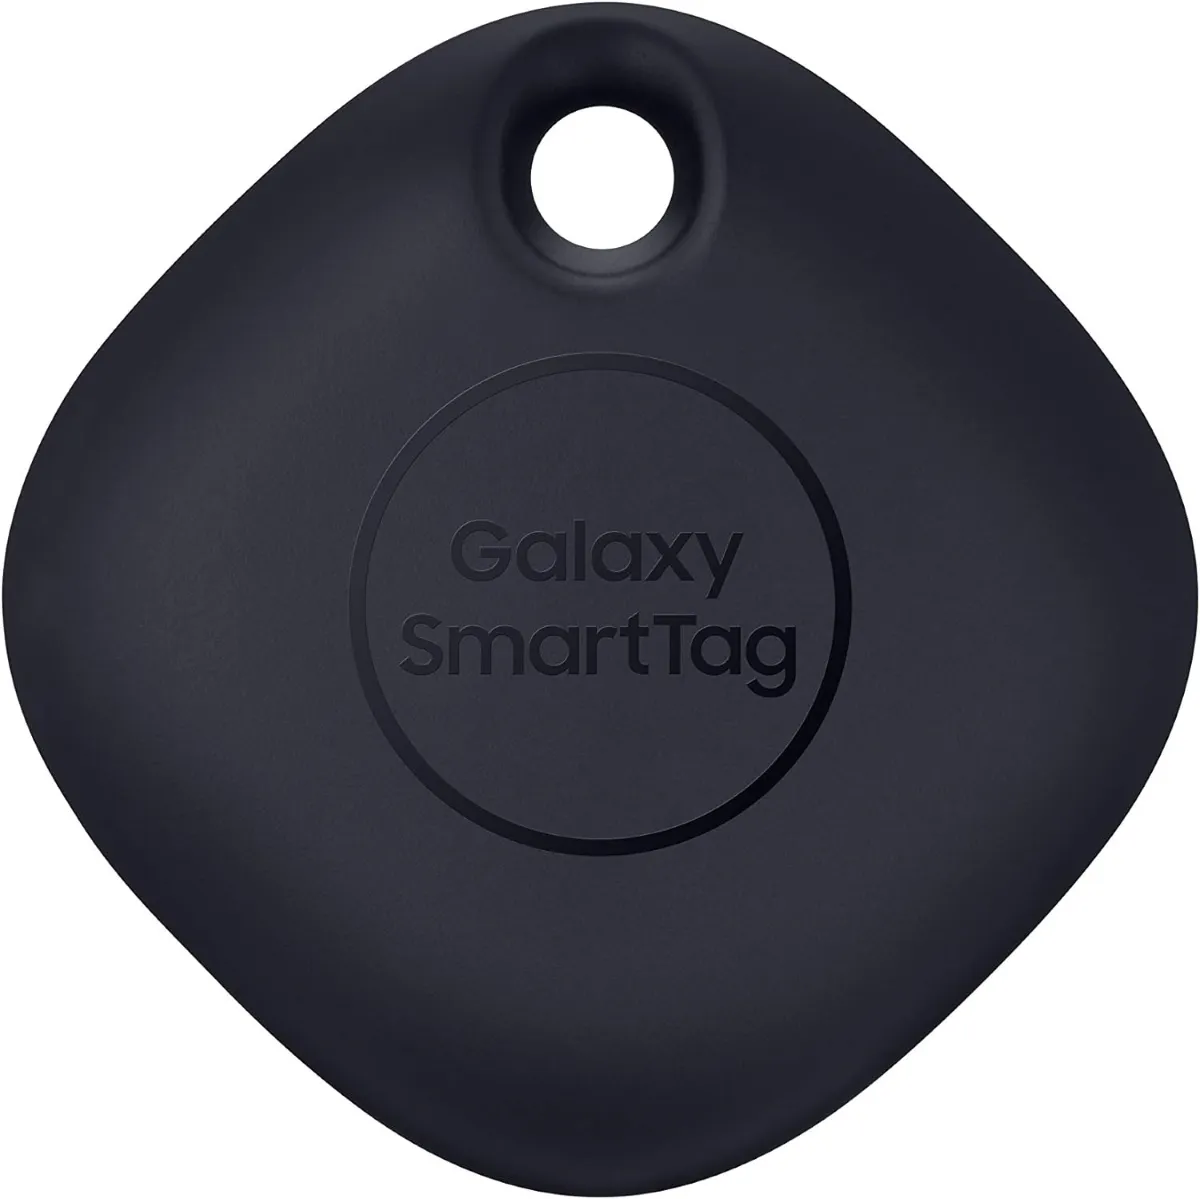 Samsung SmartTag.